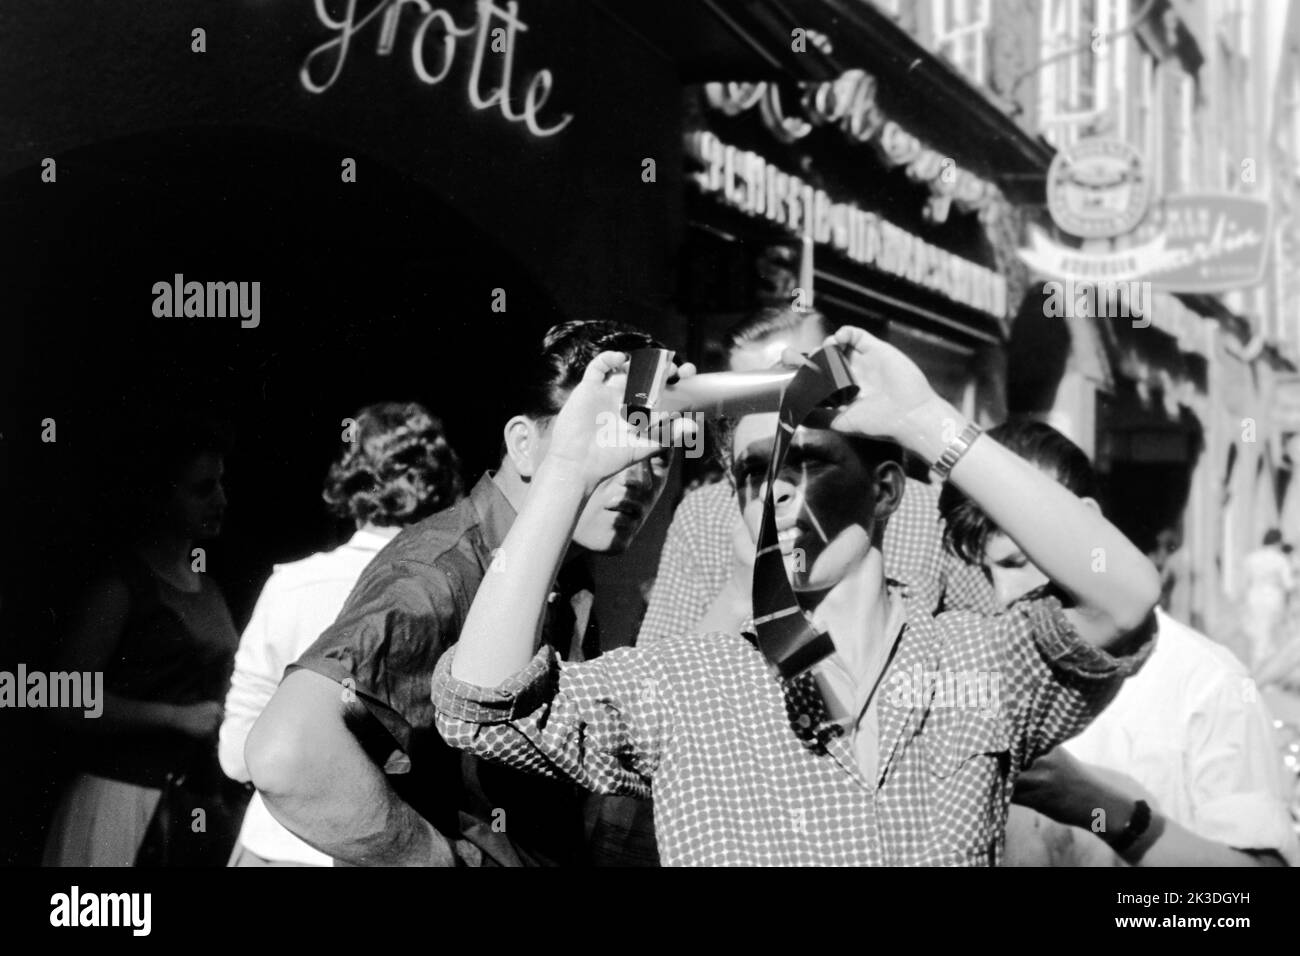 Junge Männer betrachten einen Negativfilm im Gegenlicht, Salzbourg, vers 1960. Jeunes hommes regardant un film négatif en contre-jour, Salzbourg, vers 1960. Banque D'Images